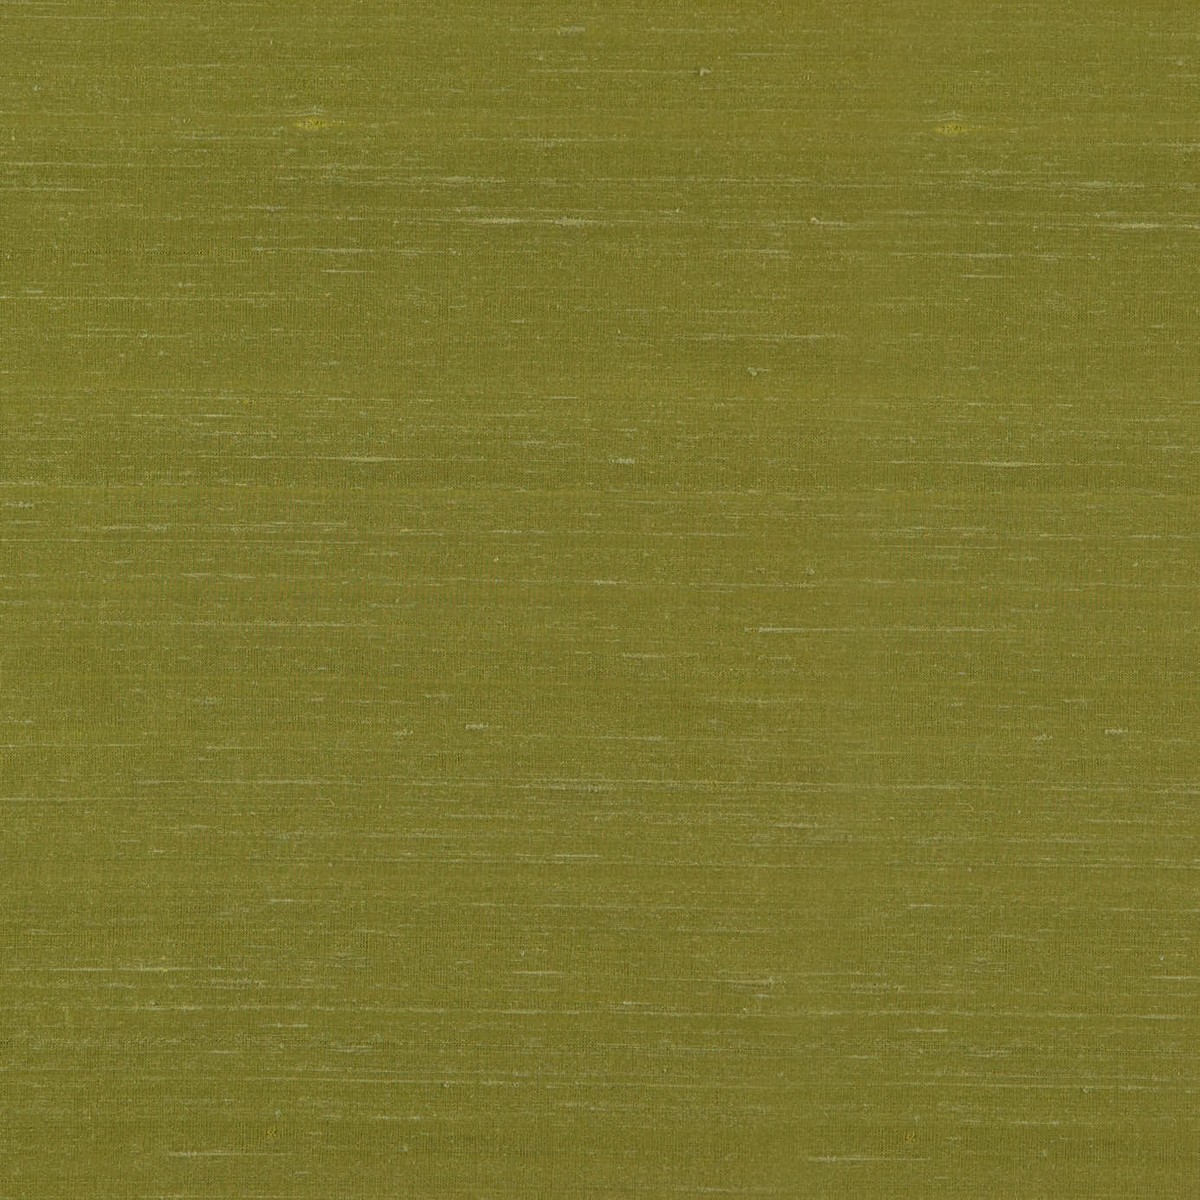 Lilaea Silks Kiwi Fabric by Harlequin